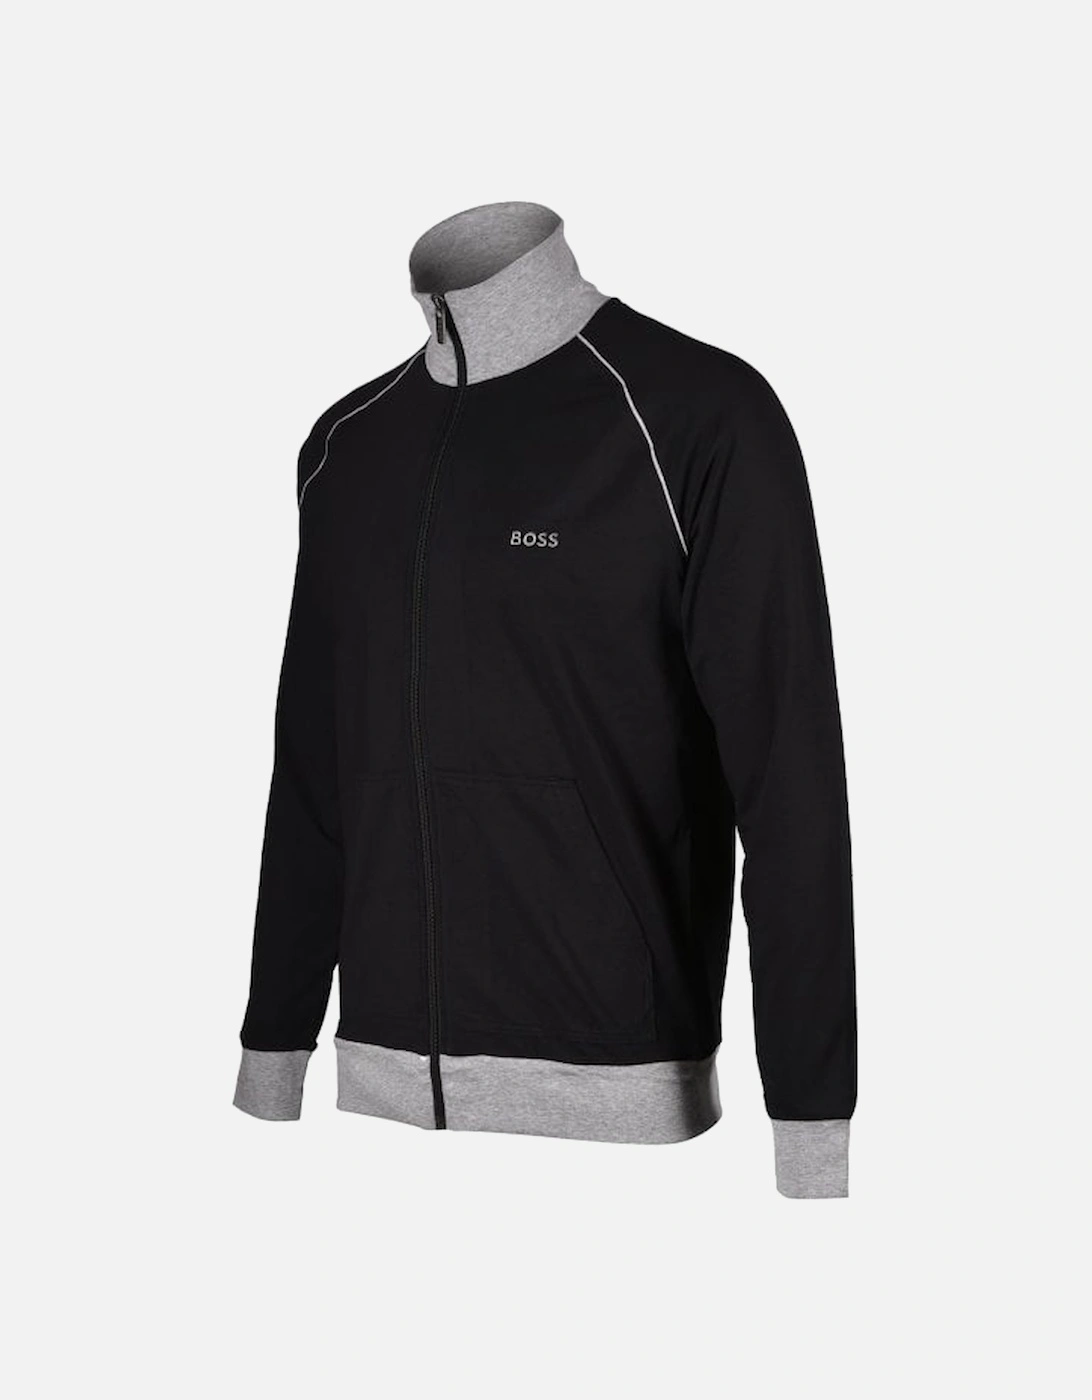 Mix & Match Zip-Thru Loungewear Track Jacket, Black/grey